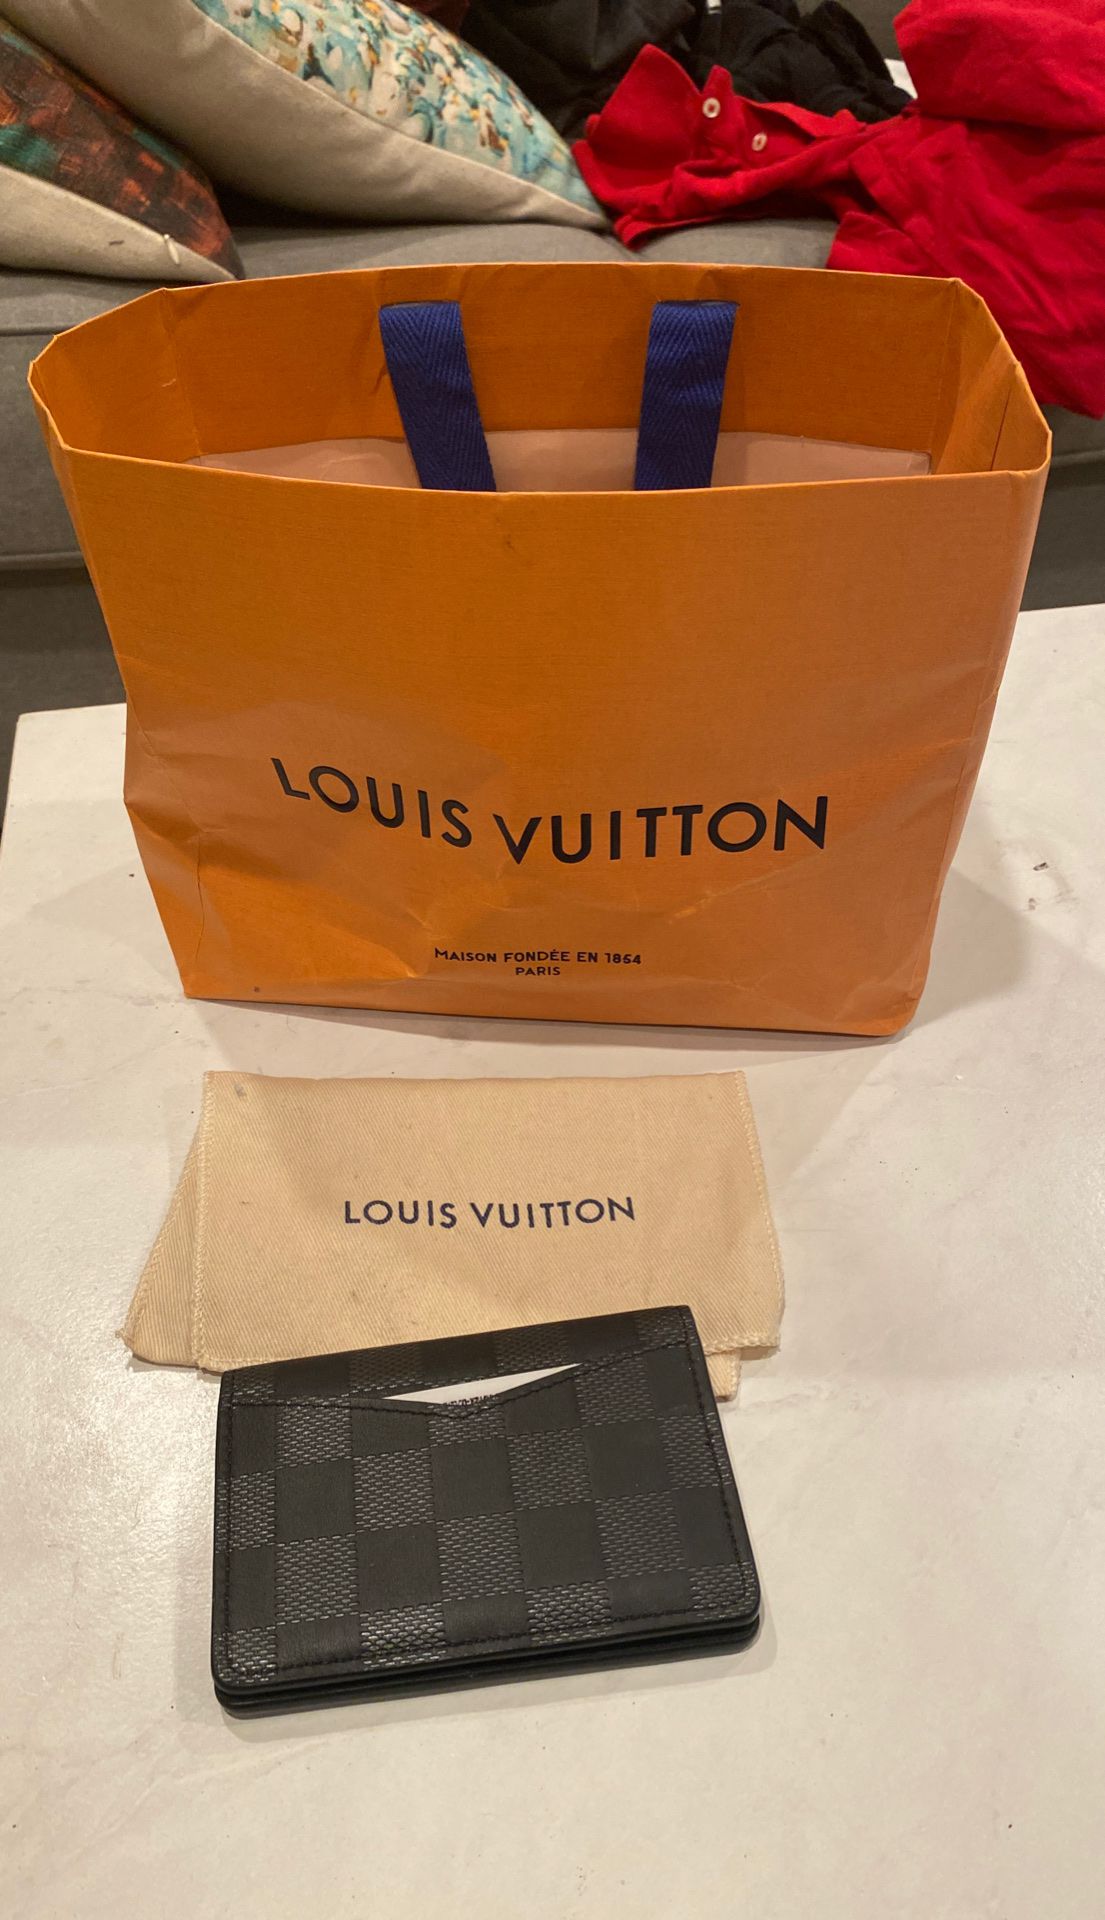 Louis Vuitton wallet brand new got it Jan 1 for $485